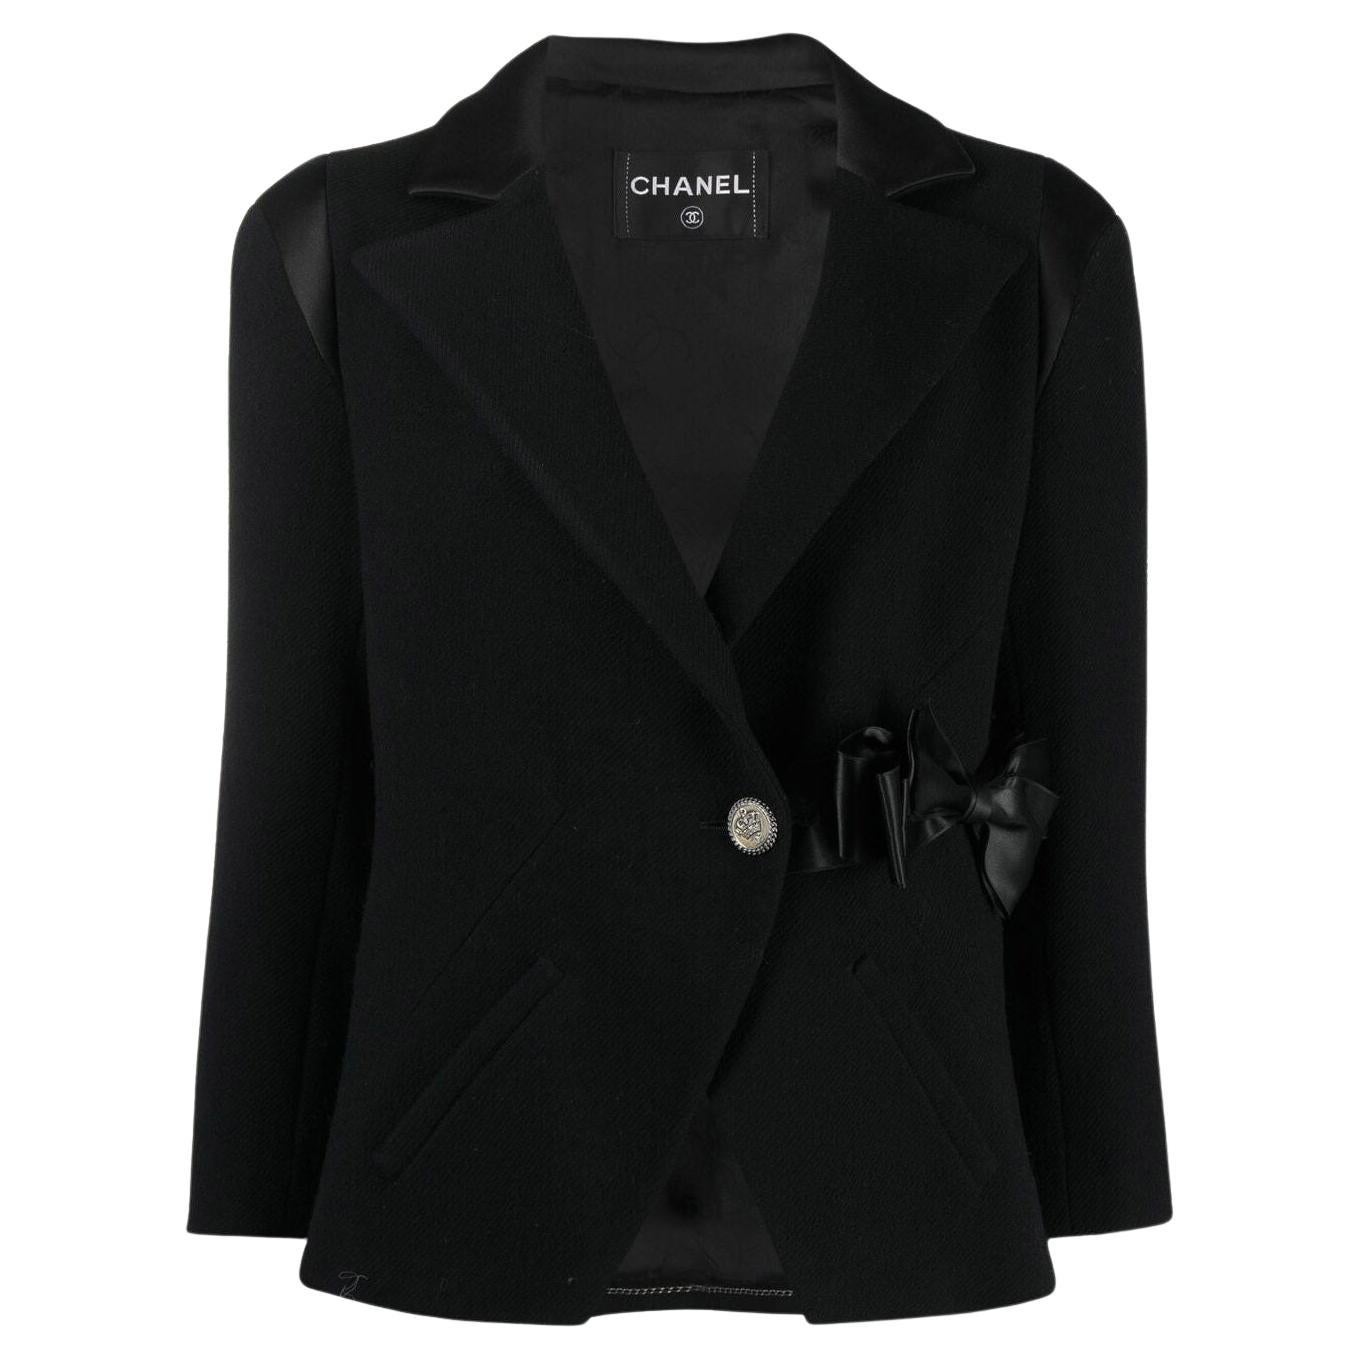 Chanel New Paris / London Runway Veste en tweed noir en vente